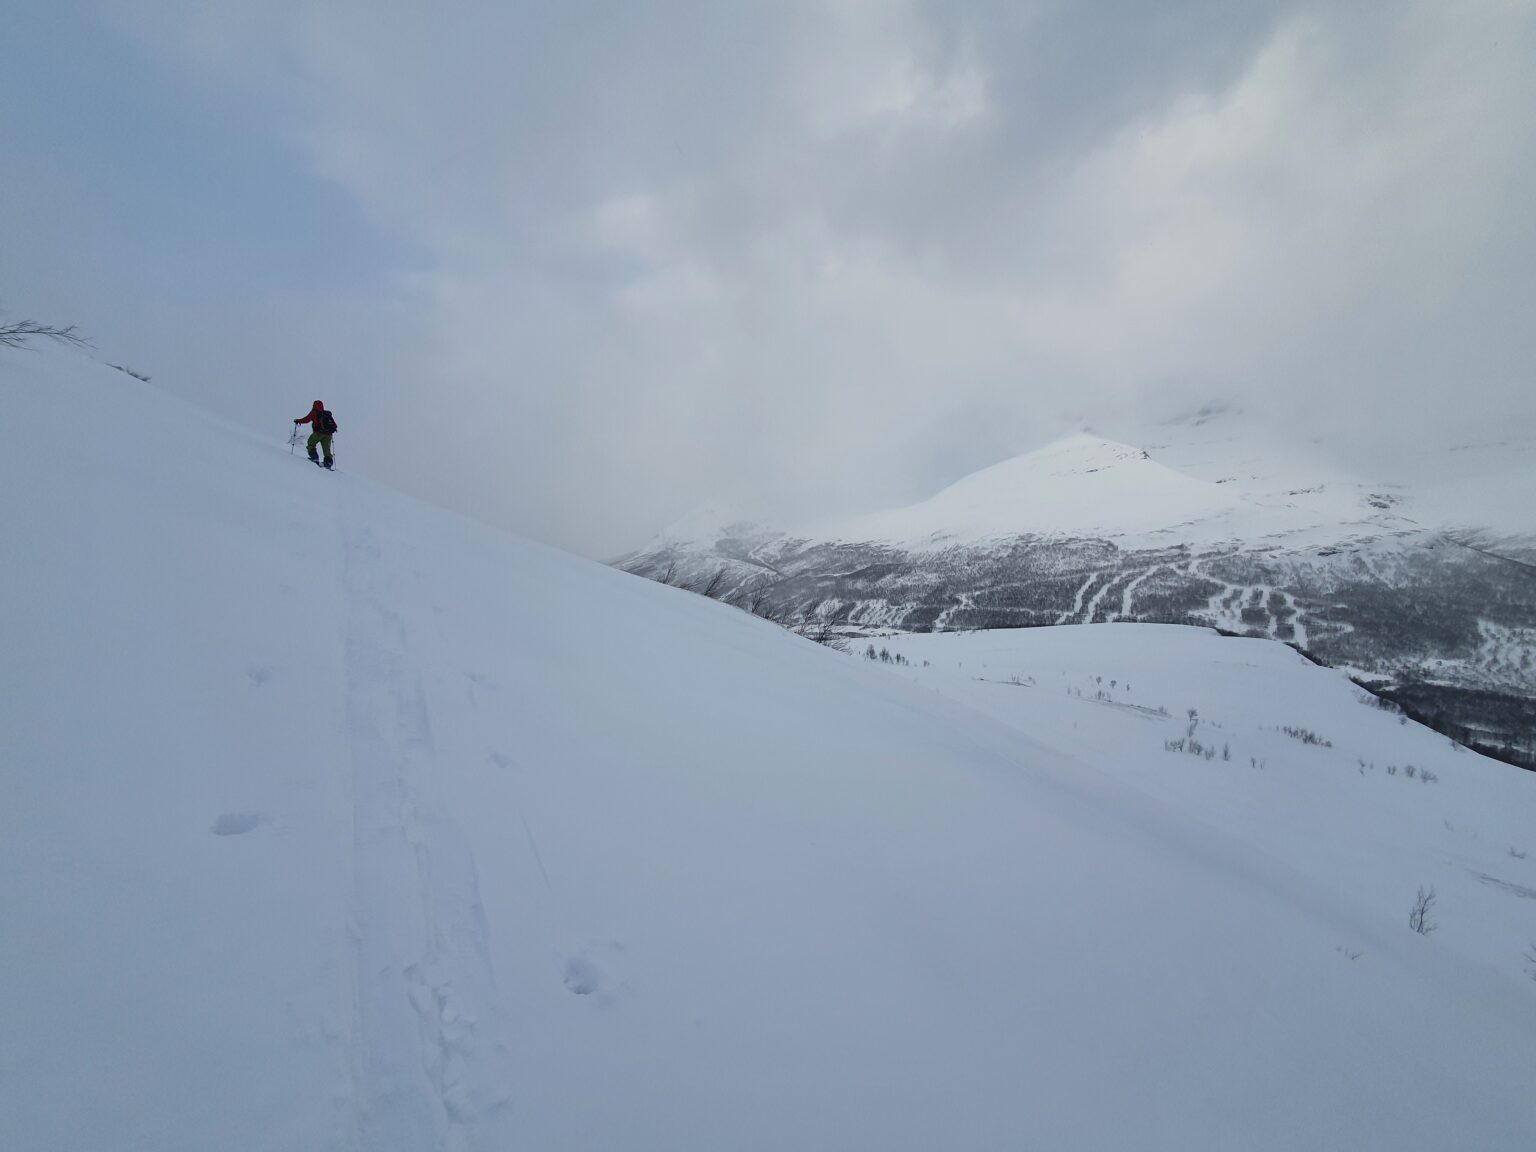 ski touring up the Southwest ride of Sjufjellet in the Tamokdalen valley